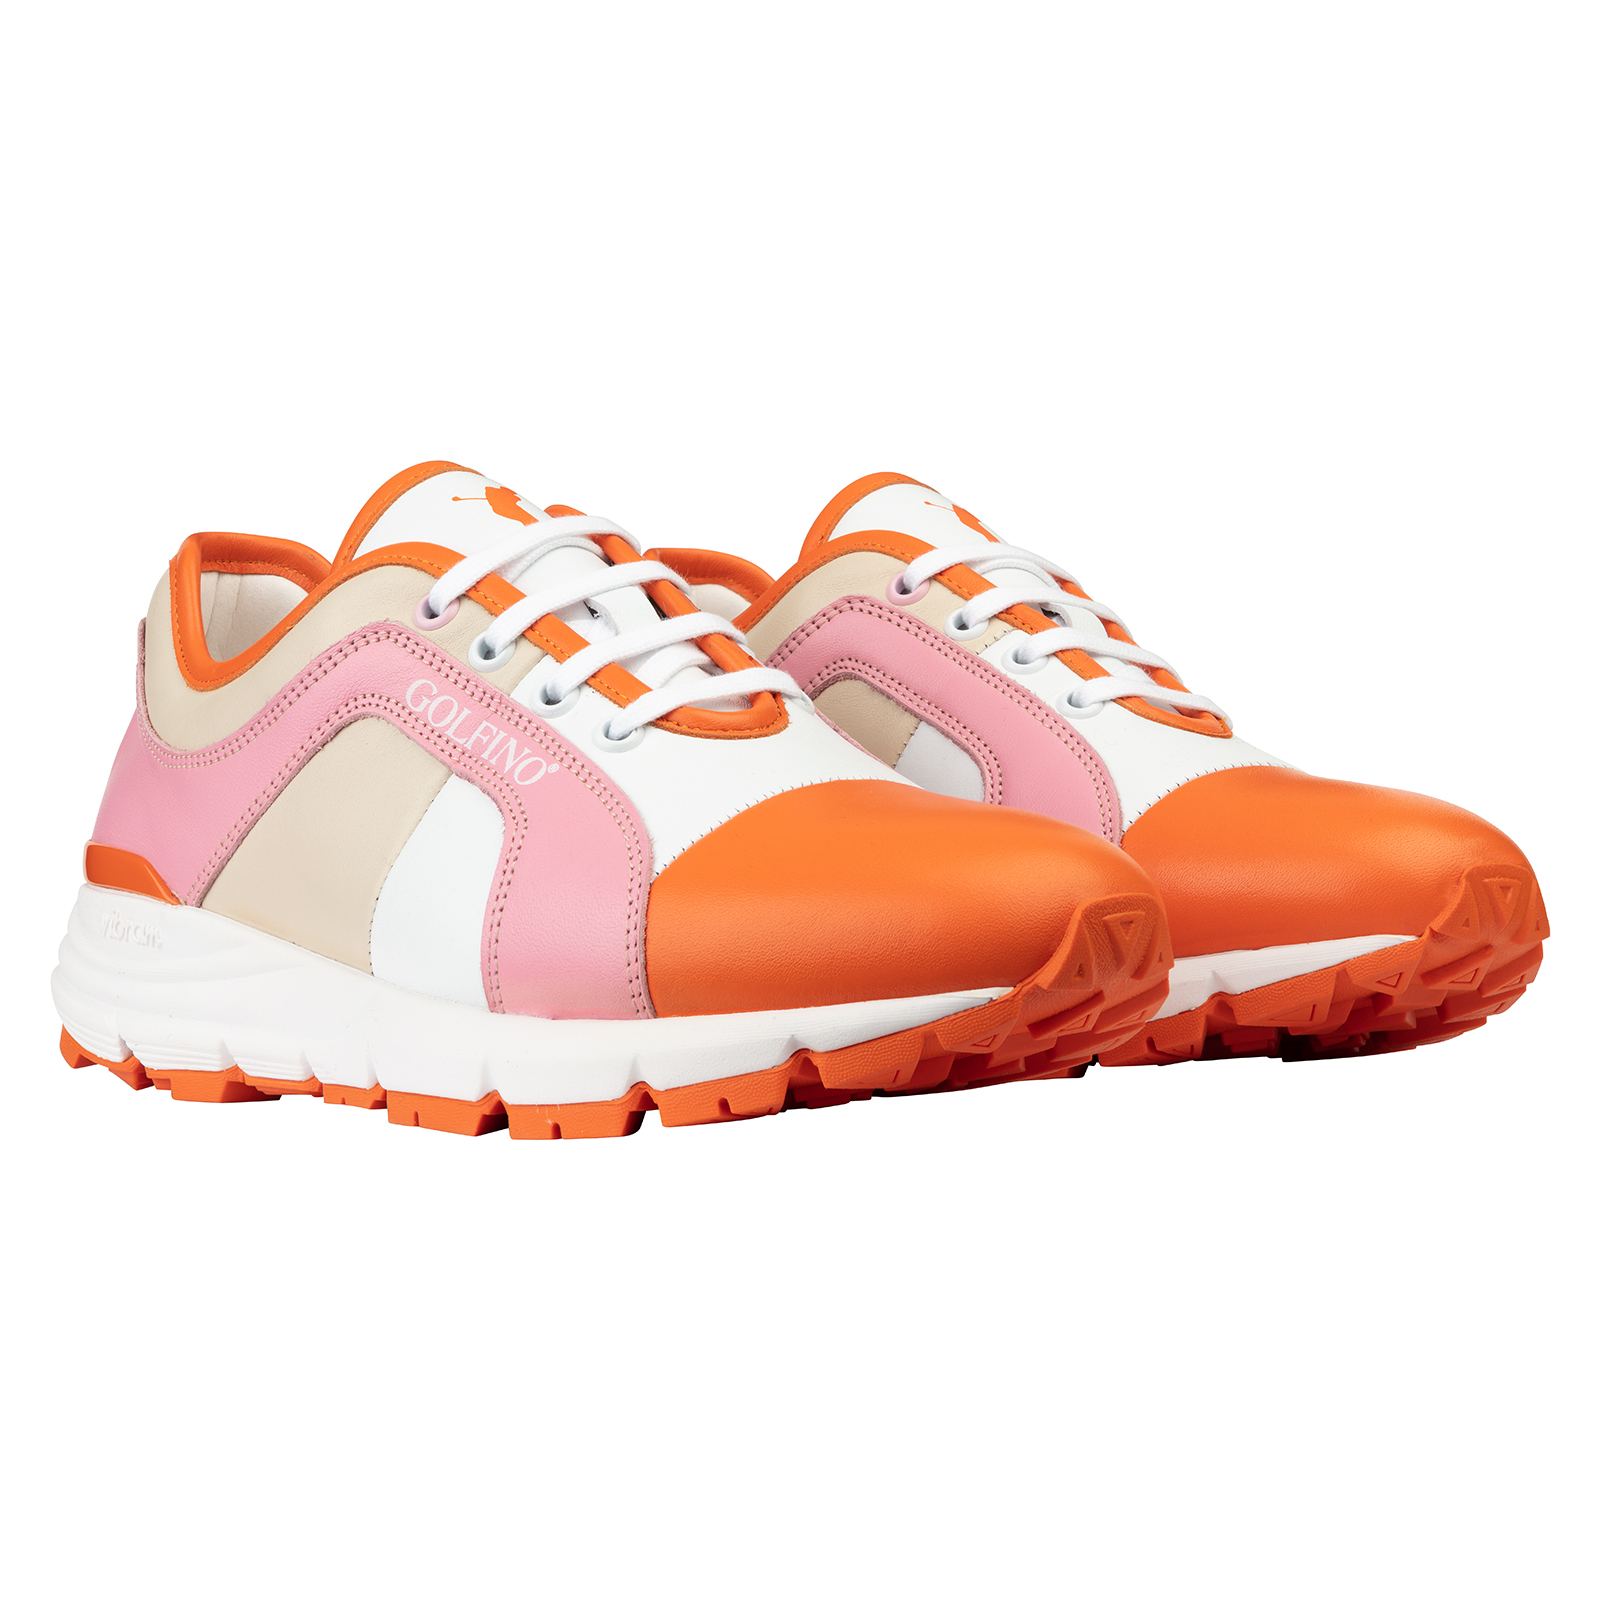 Multicolour Echtleder Golf Schuhe für Damen